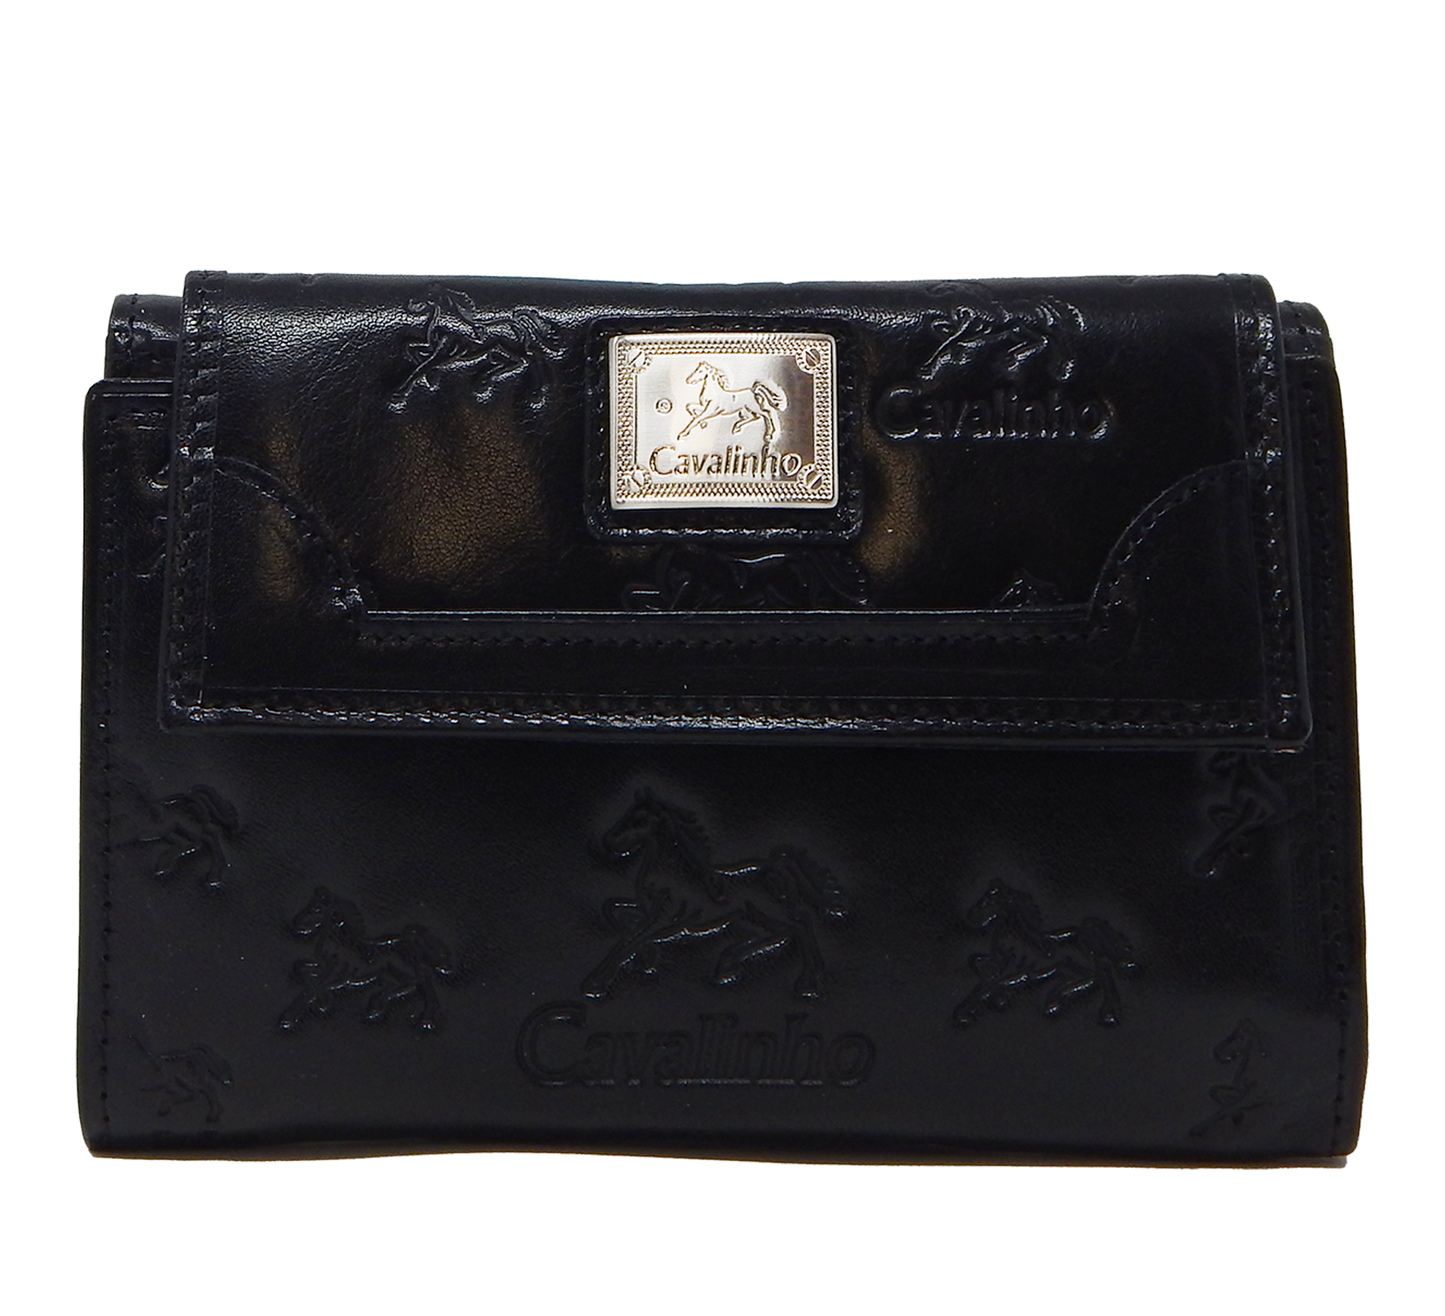 #color_ Black | Cavalinho Cavalo Lusitano Leather Wallet - Black - 28090202_01